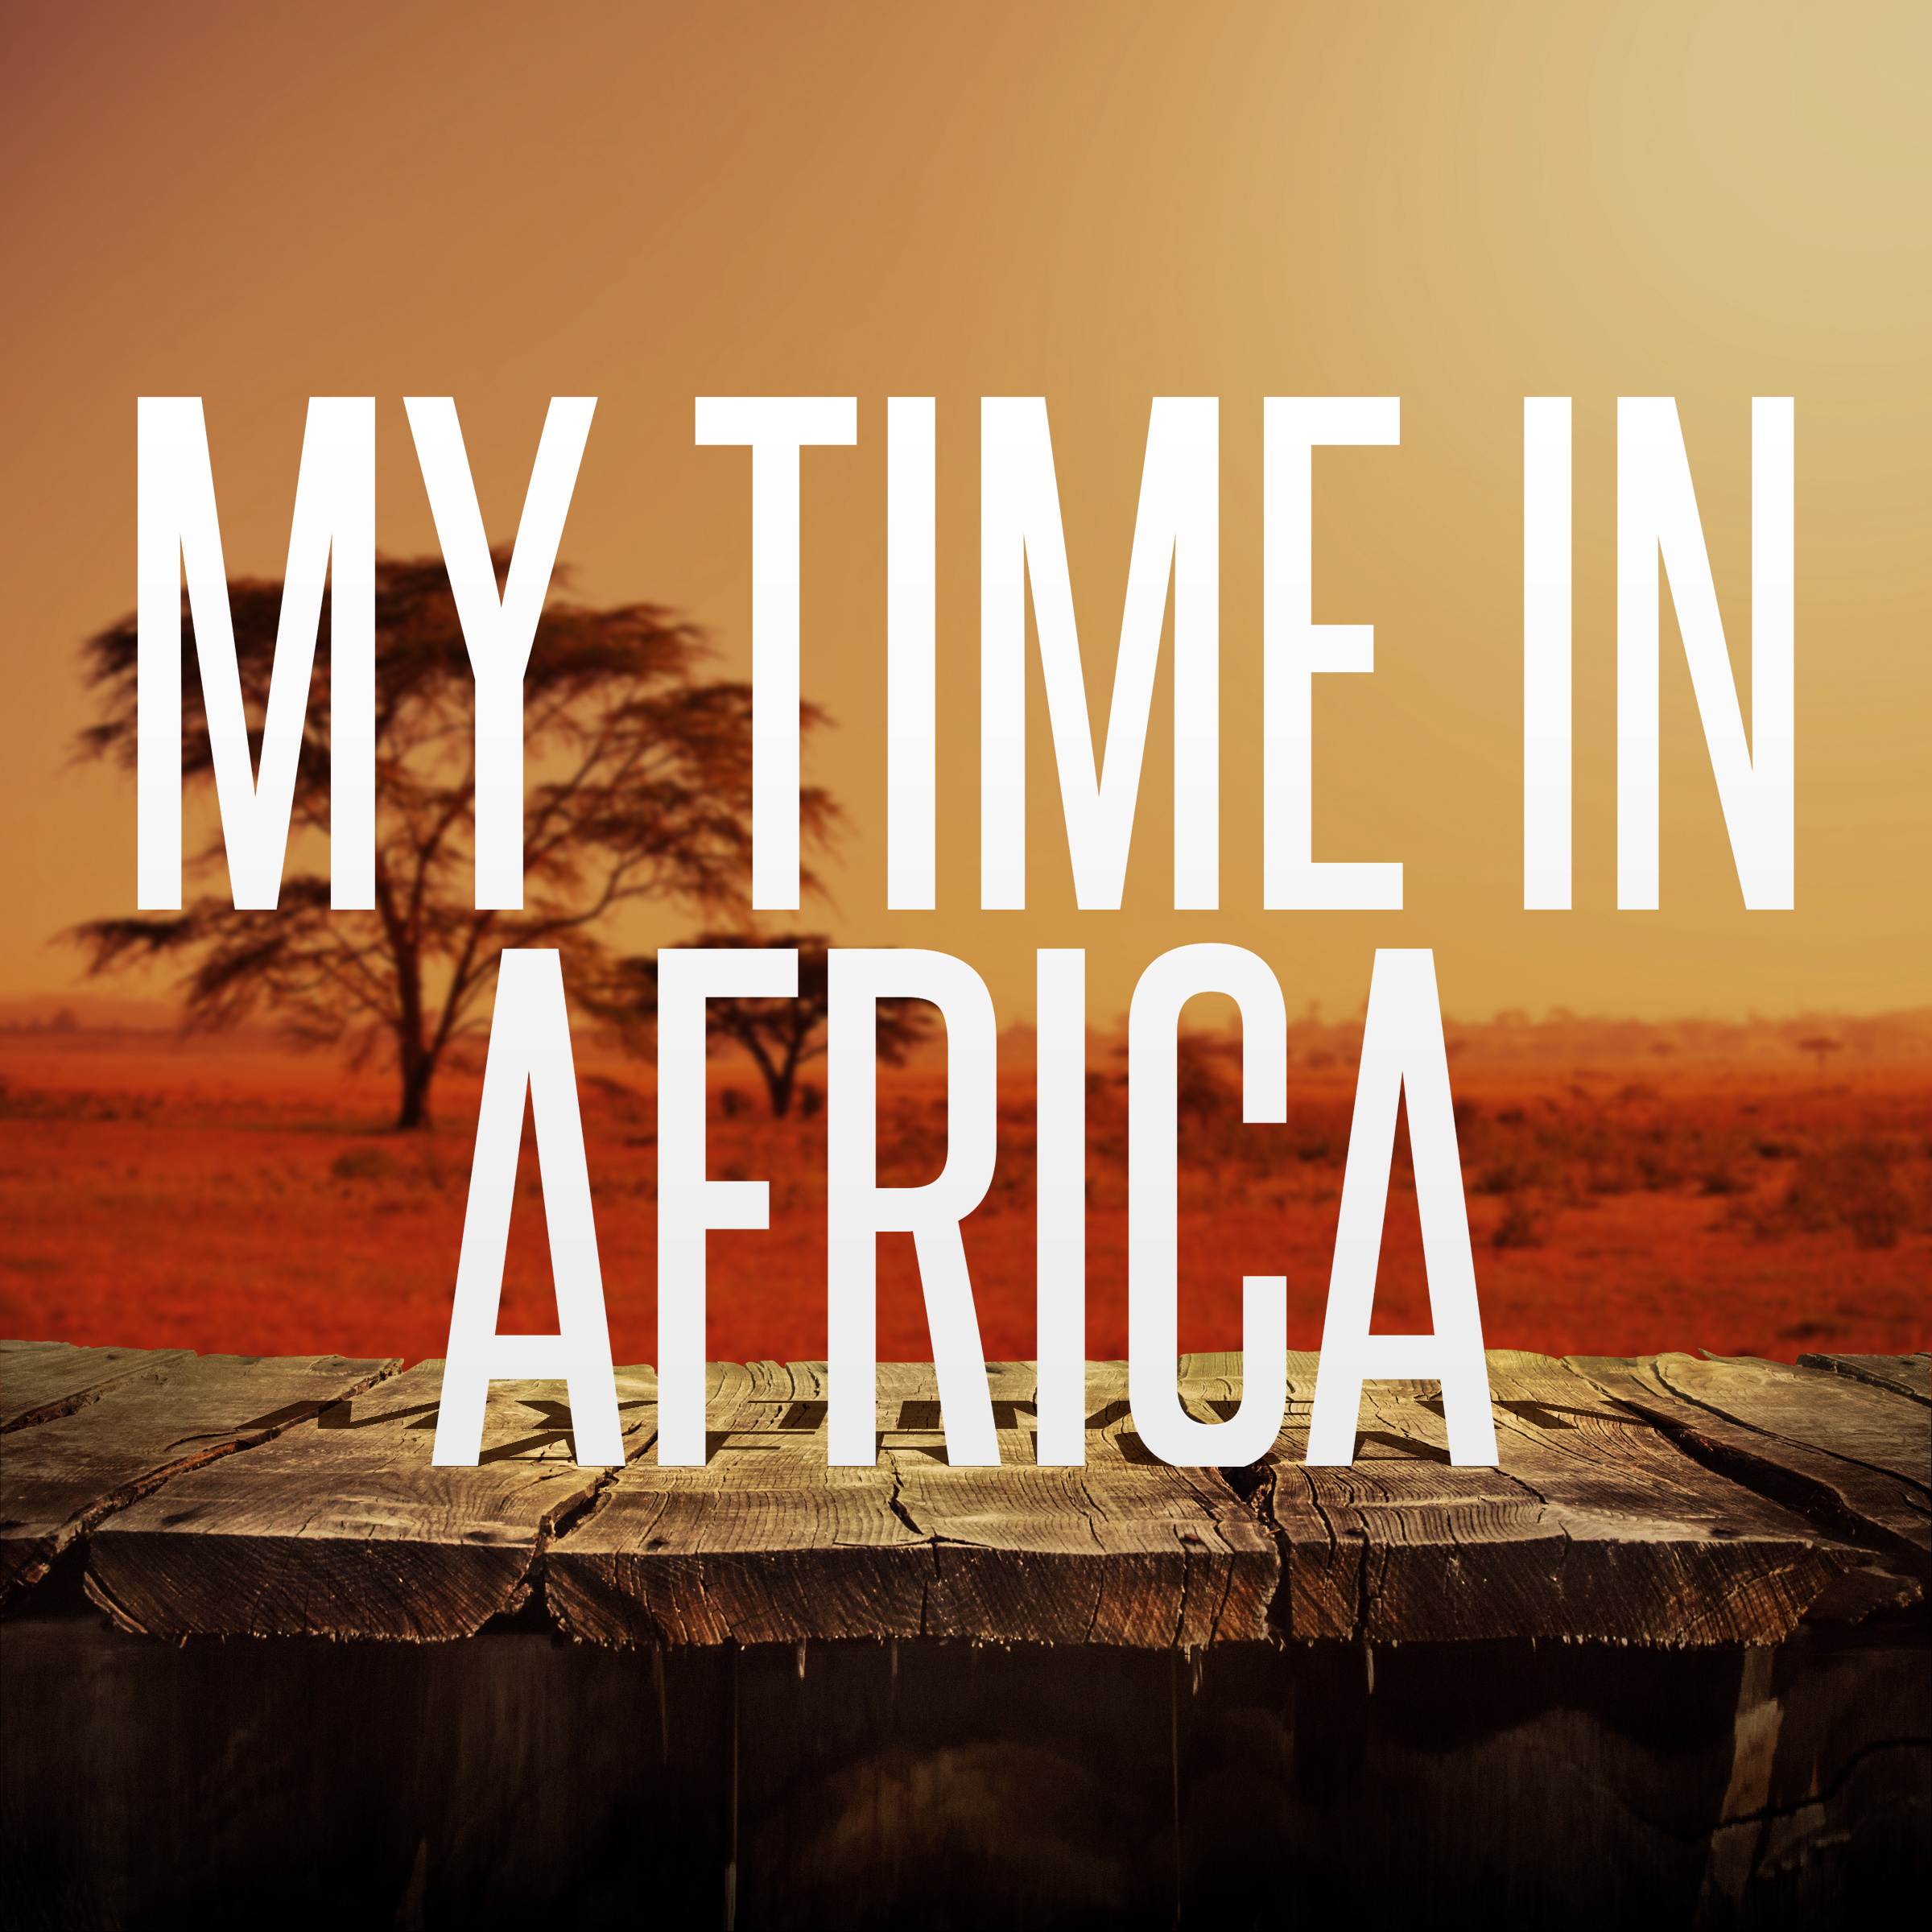 Beyond Africa